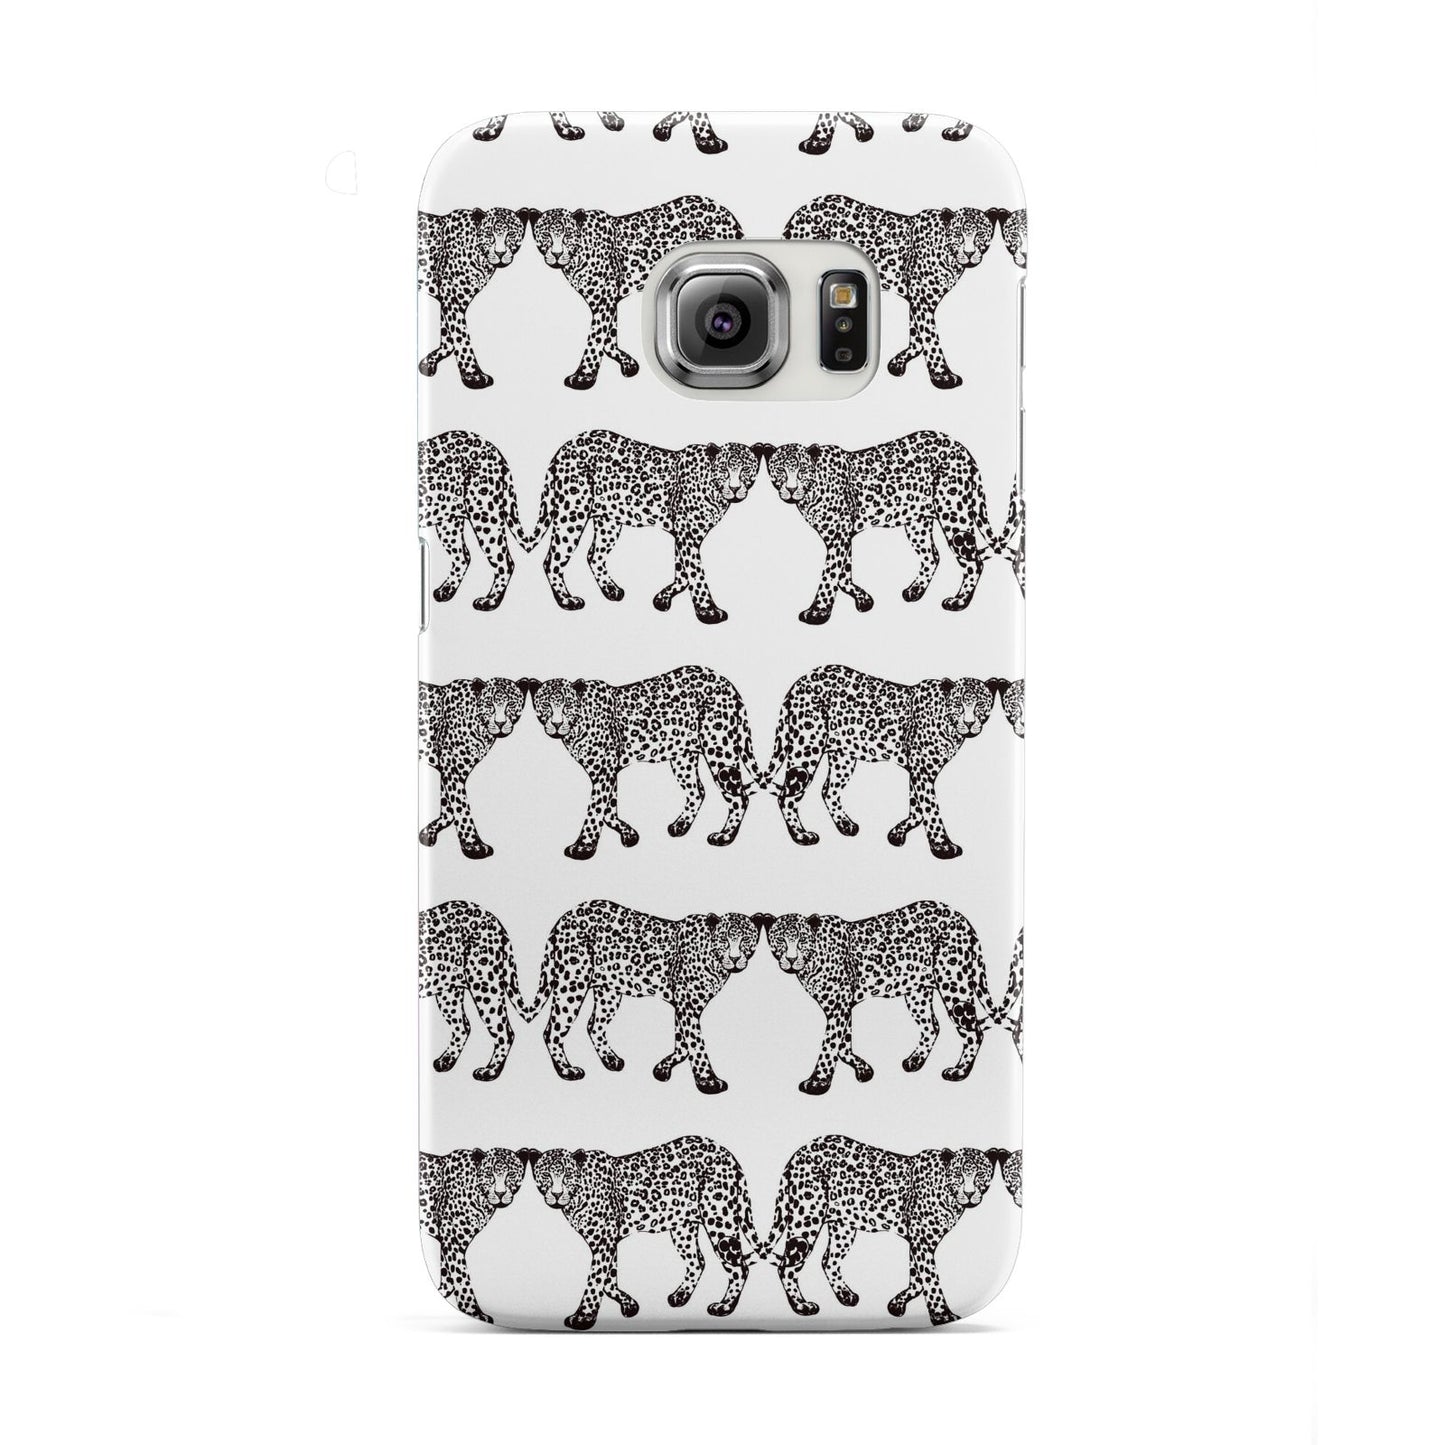 Monochrome Mirrored Leopard Print Samsung Galaxy S6 Edge Case